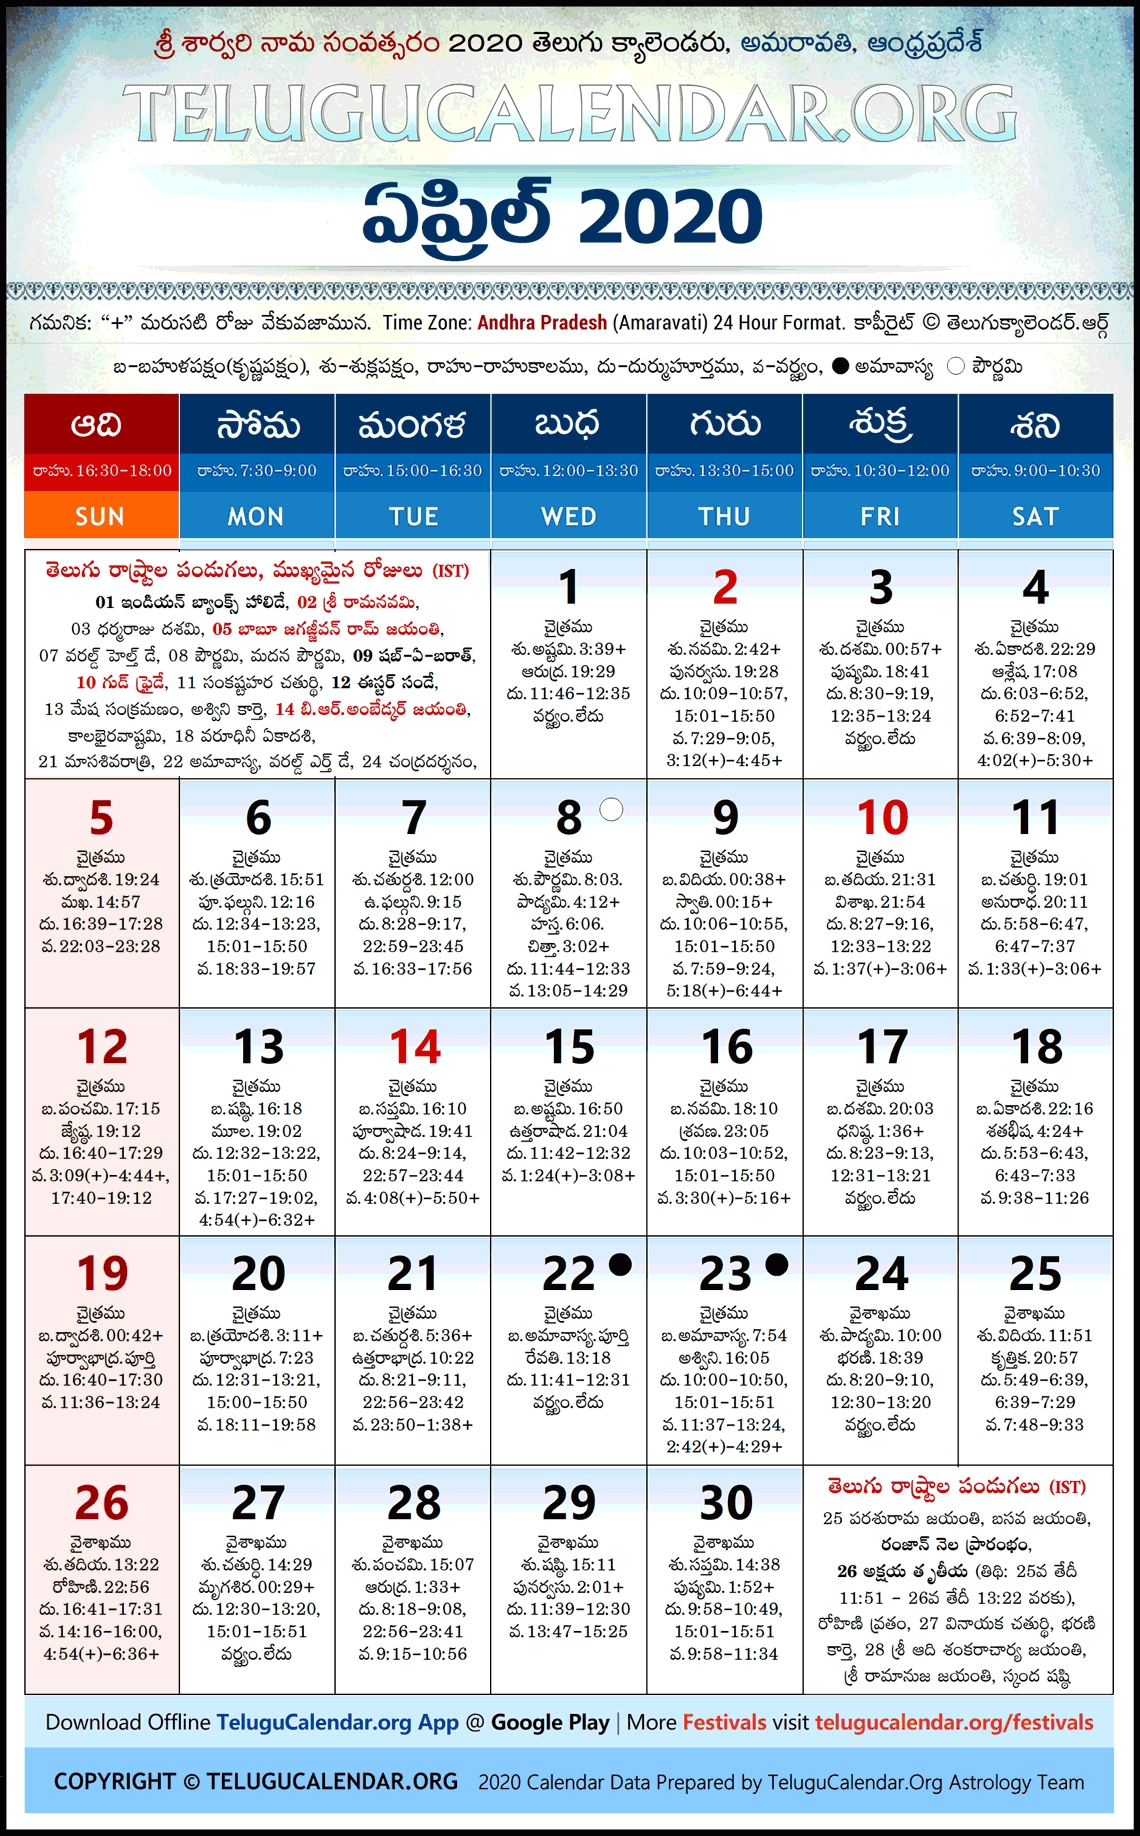 Venkatrama And Co January 2021 Telugu Calendar | Printable March Telugu Calendar October 2021 January